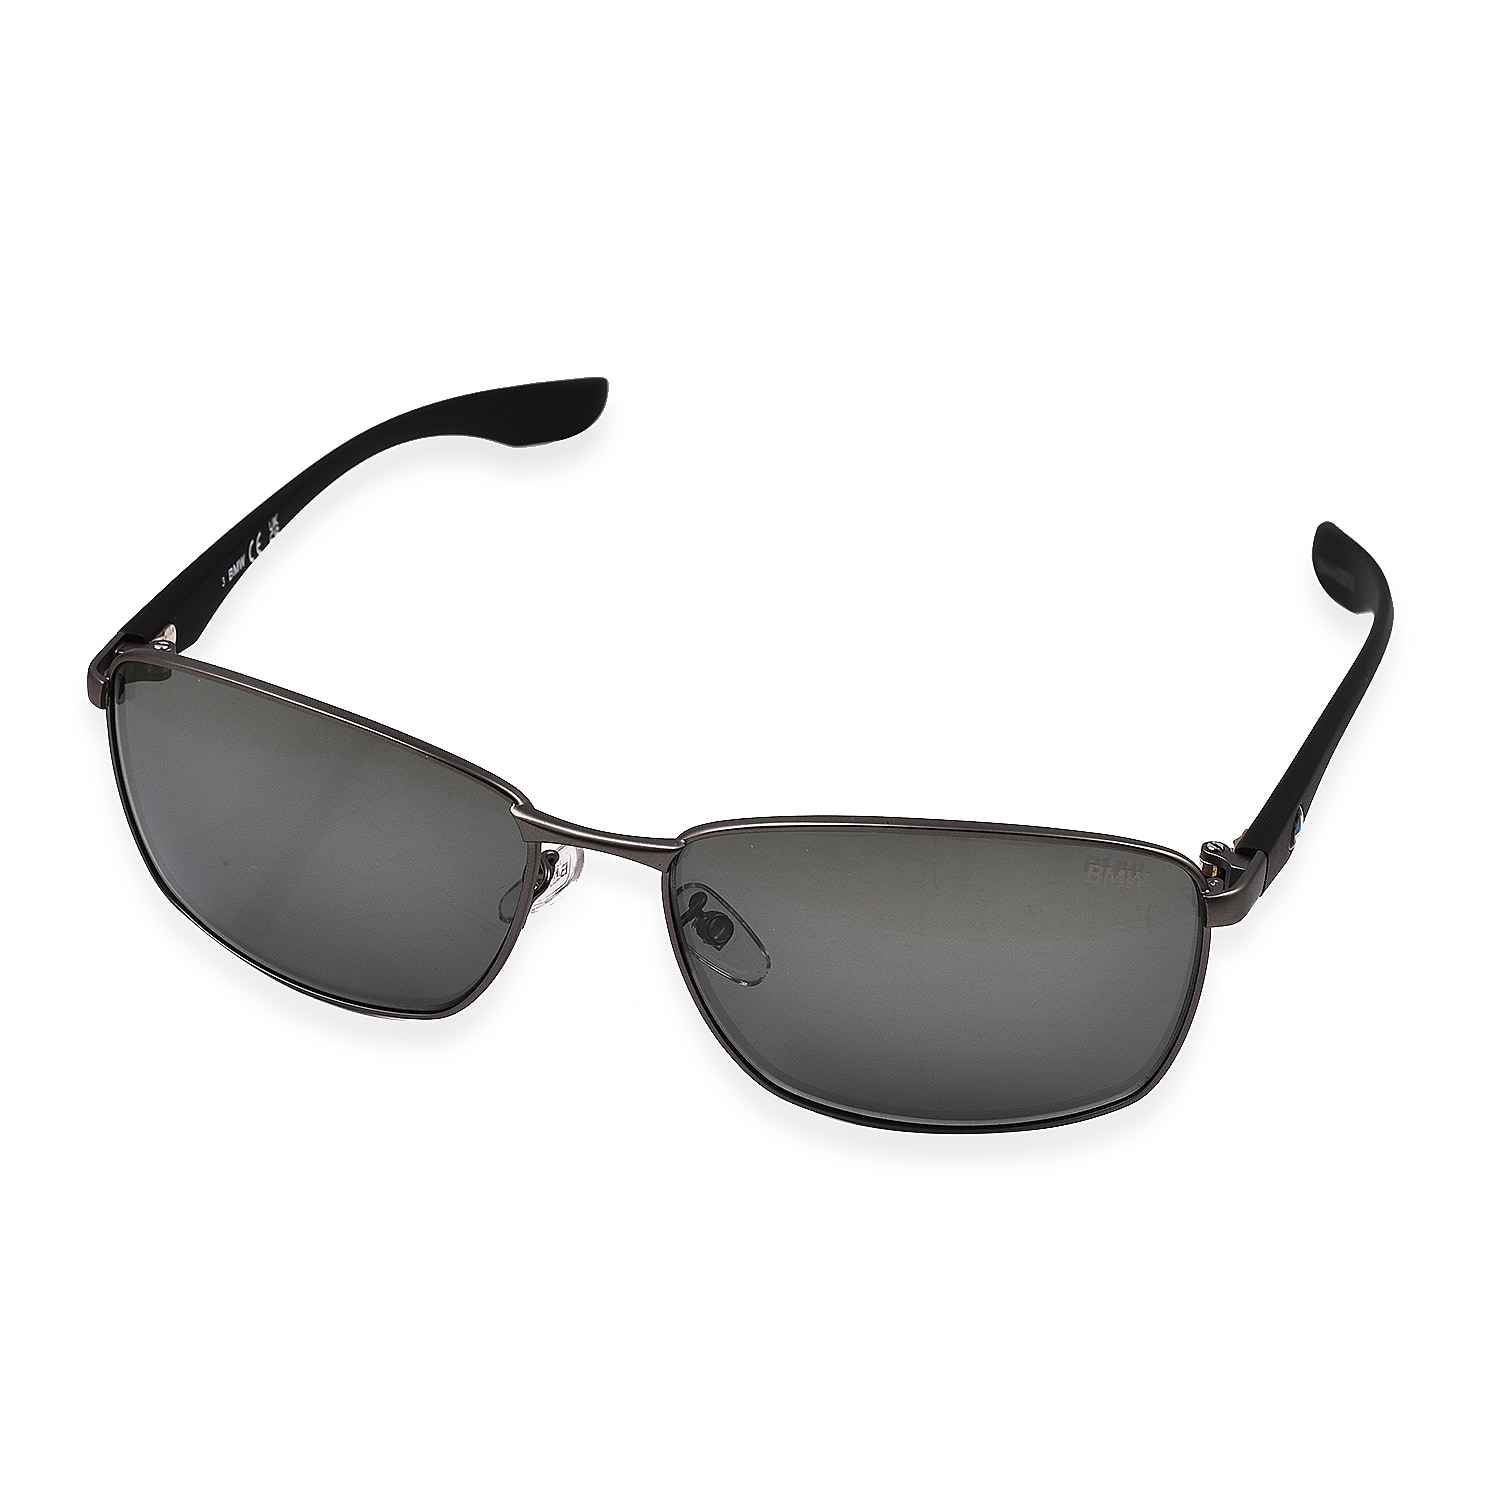 Buy BMW B6513 Aviator Sunglasses, Black, 62 mm at Amazon.in